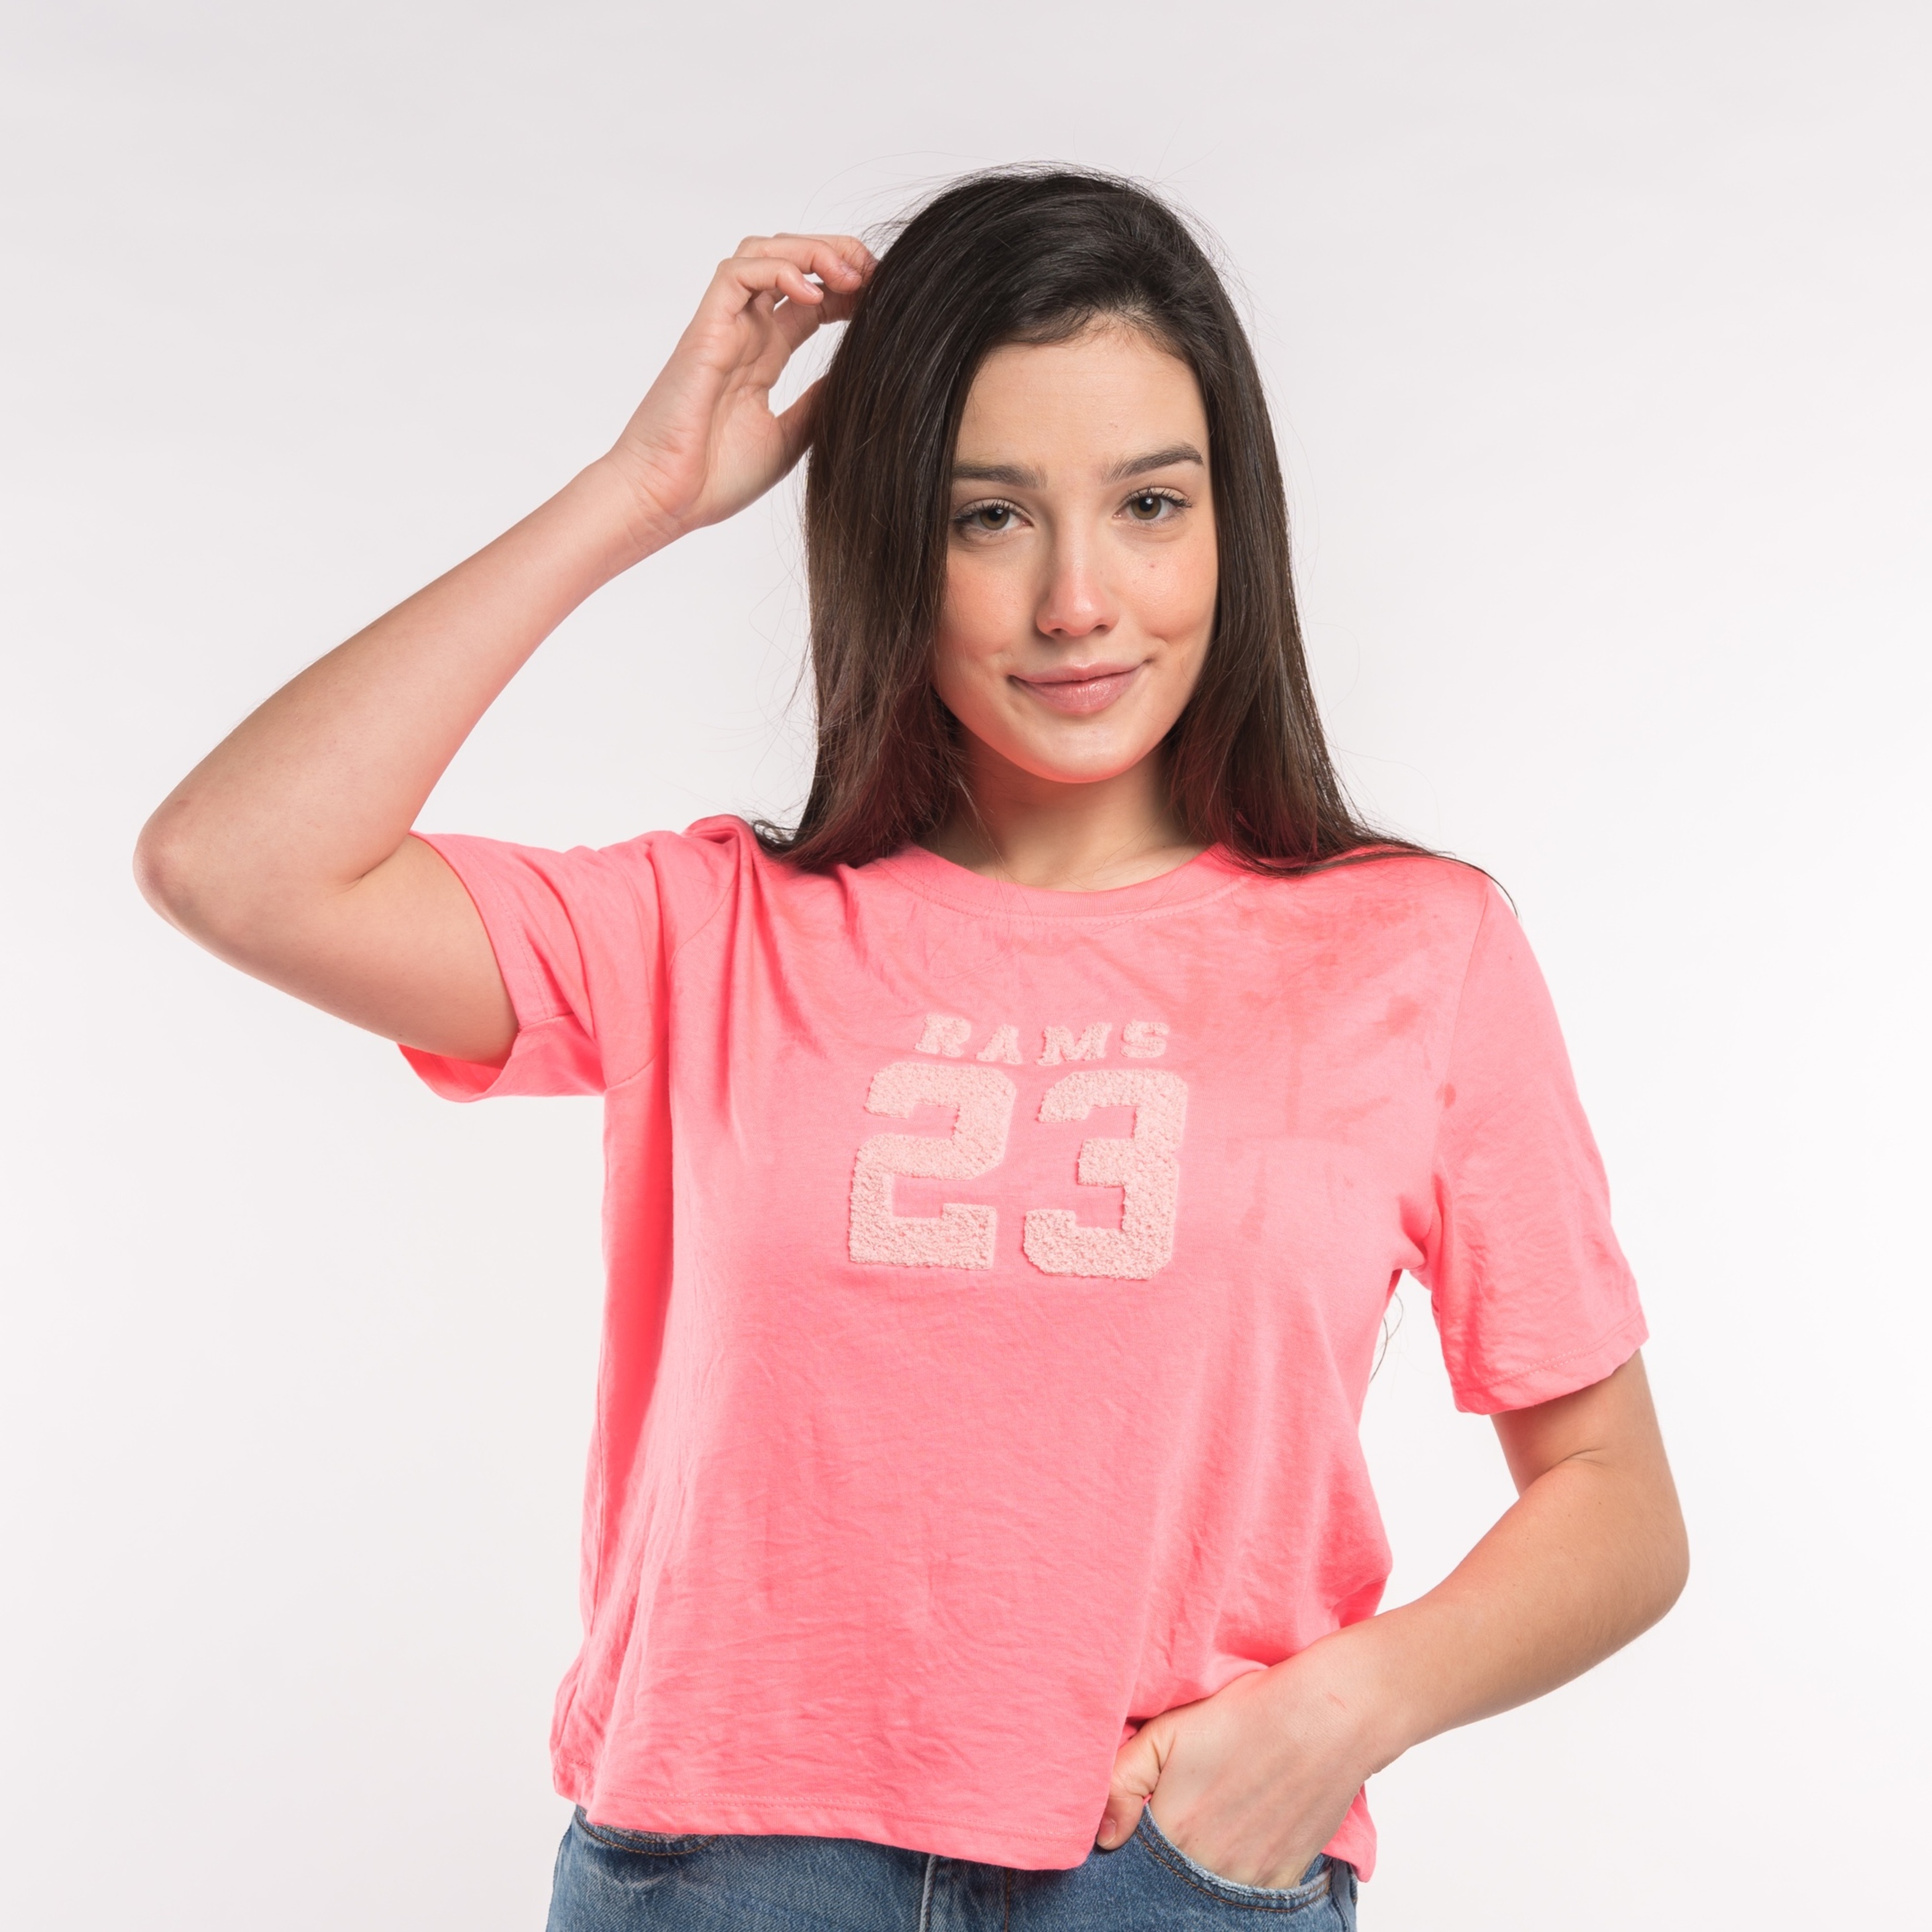 Camiseta Rams 23 Toalla - rosa - 